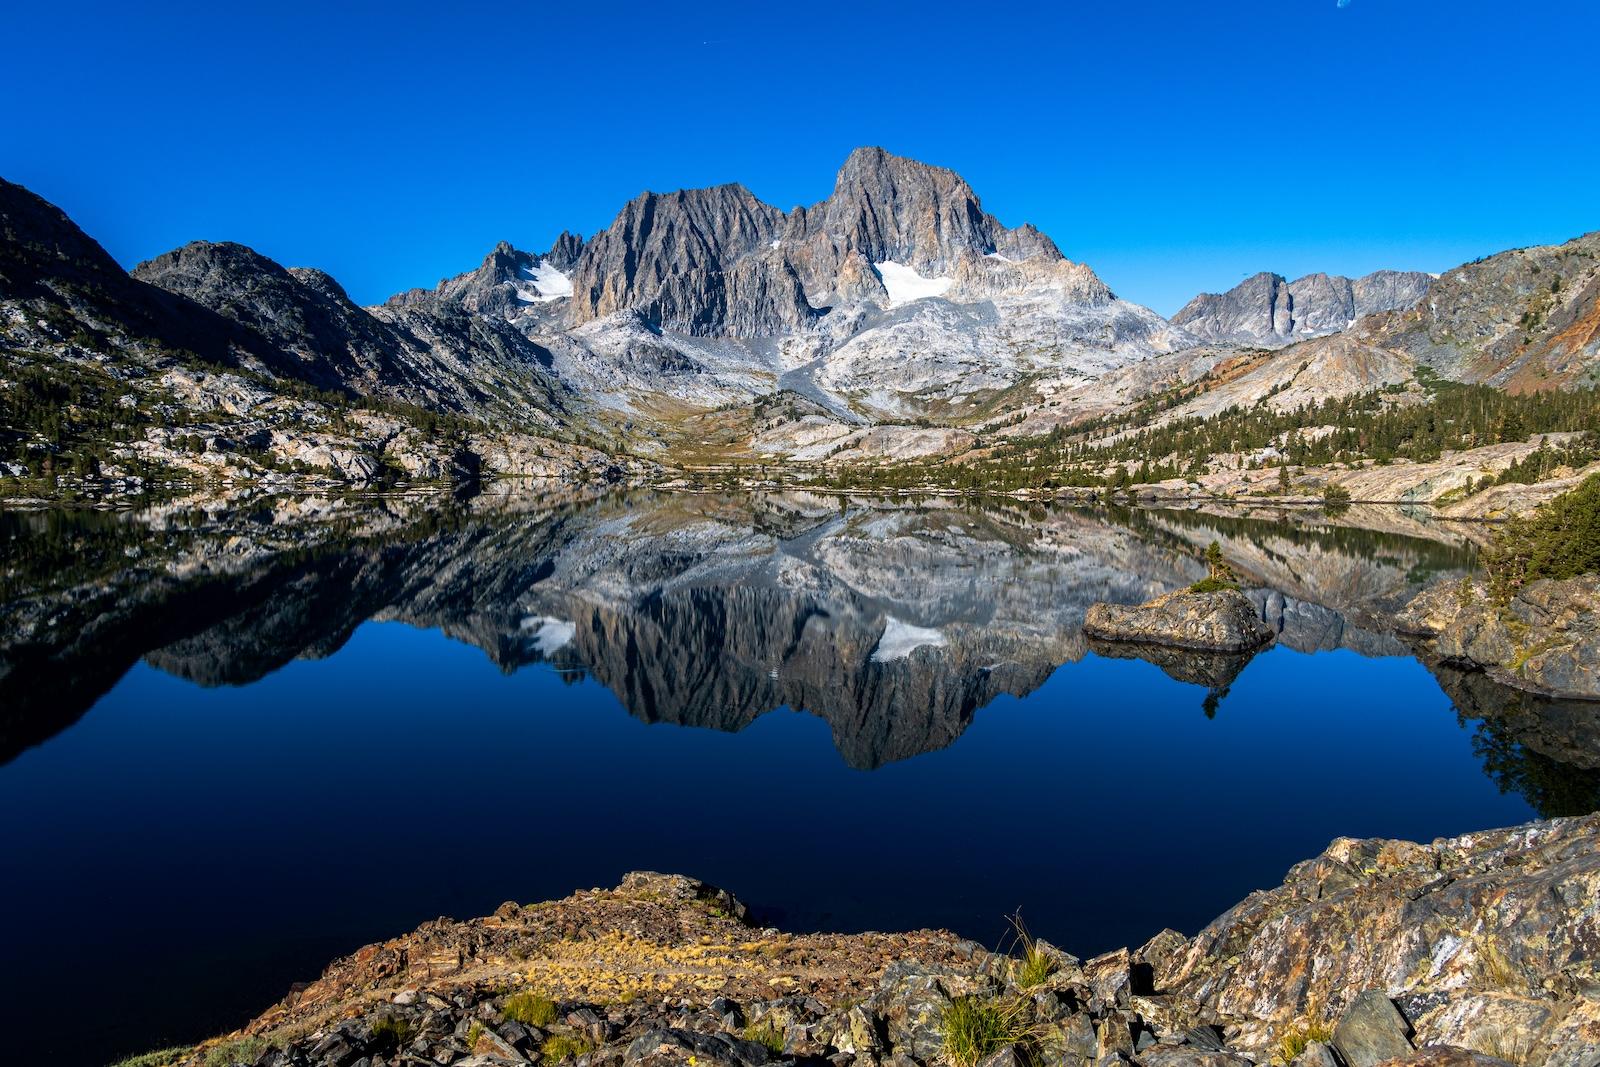 Reflection on Garnet Lake in the Sierra.  Photo by Brock Dallman